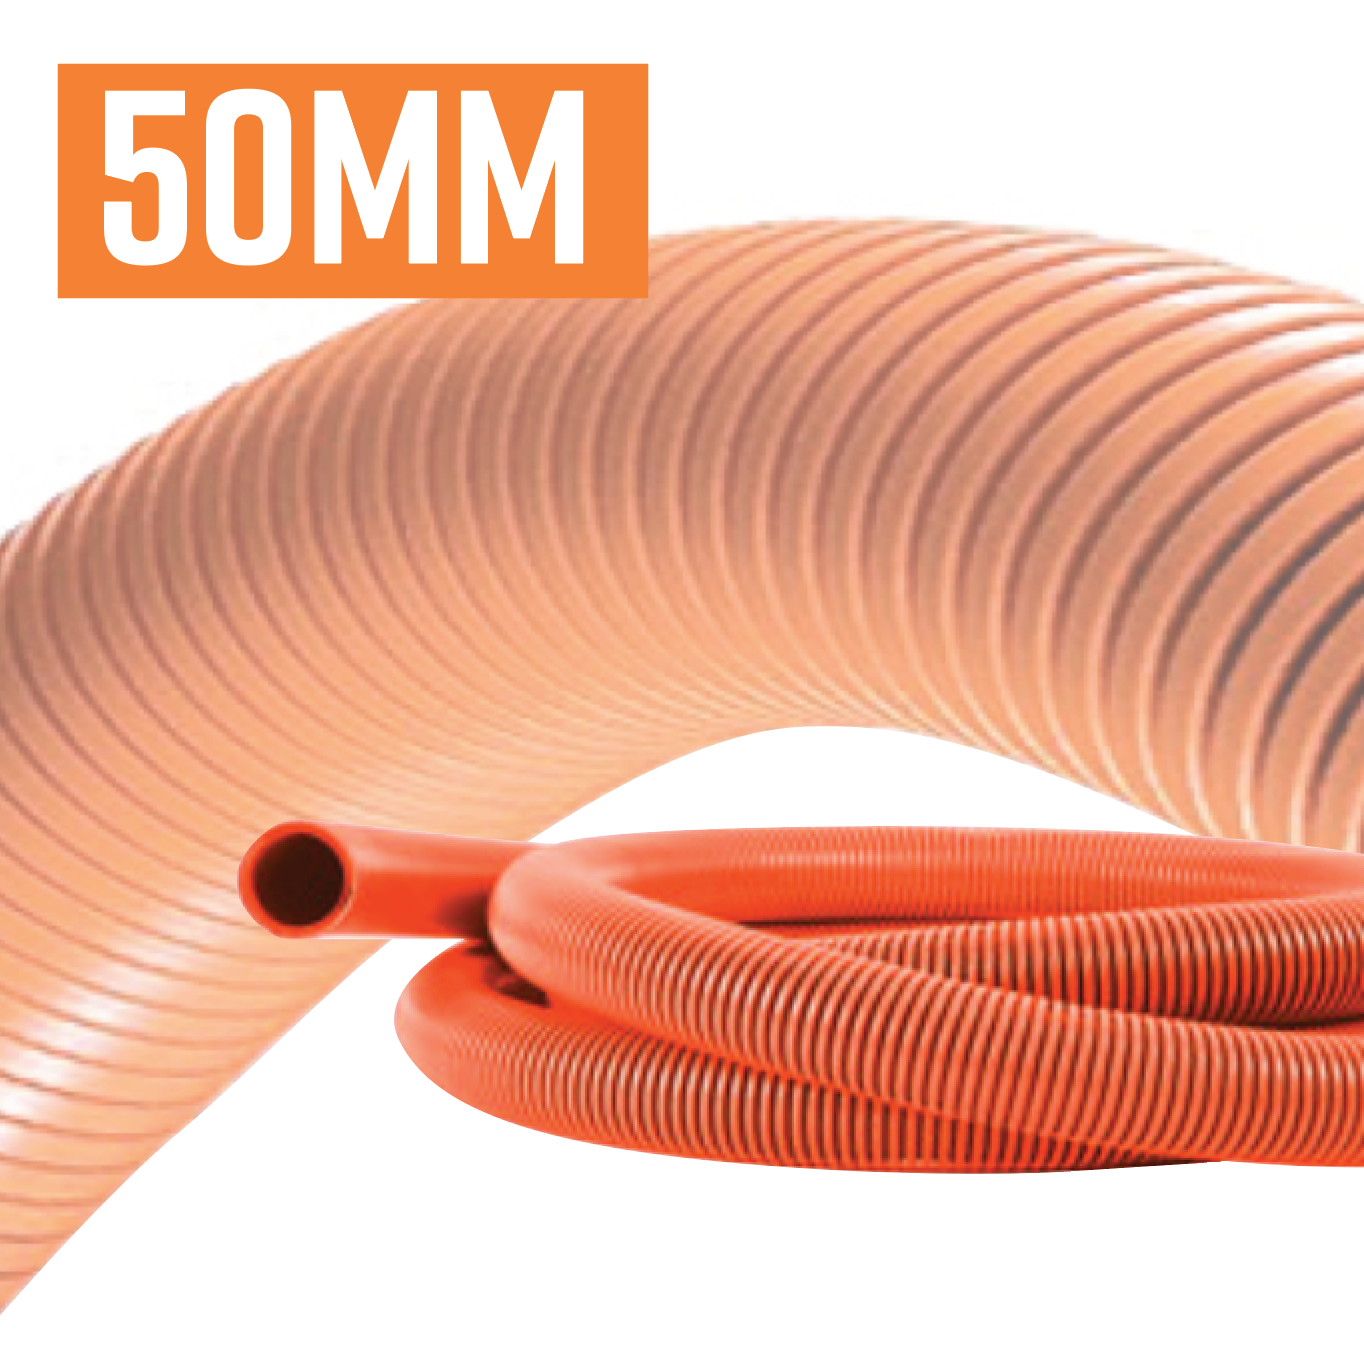 50mm Industrial Vacuum Hose - Orange Flexible Ribbed ($ per metre)  (min order qty 5m)